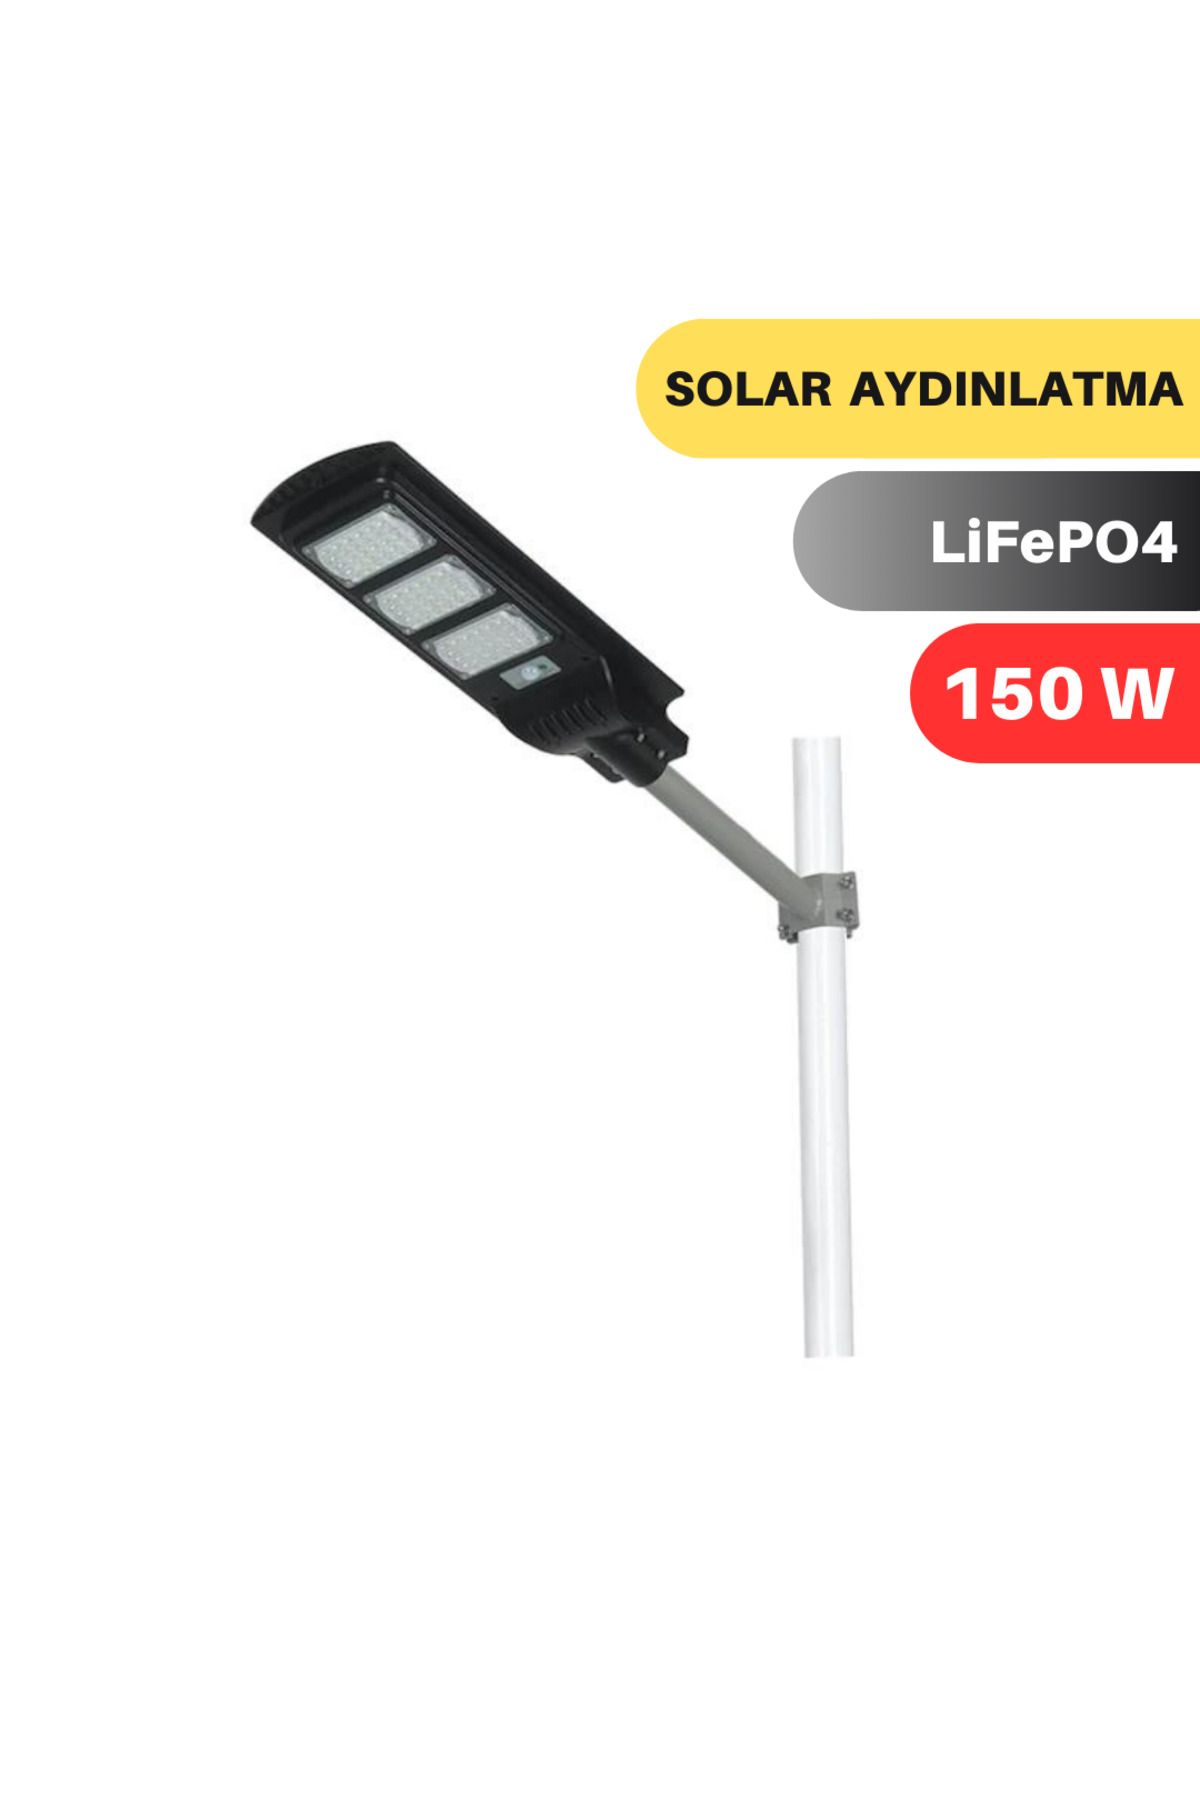 Lexron 150w Solar Aydınlatma